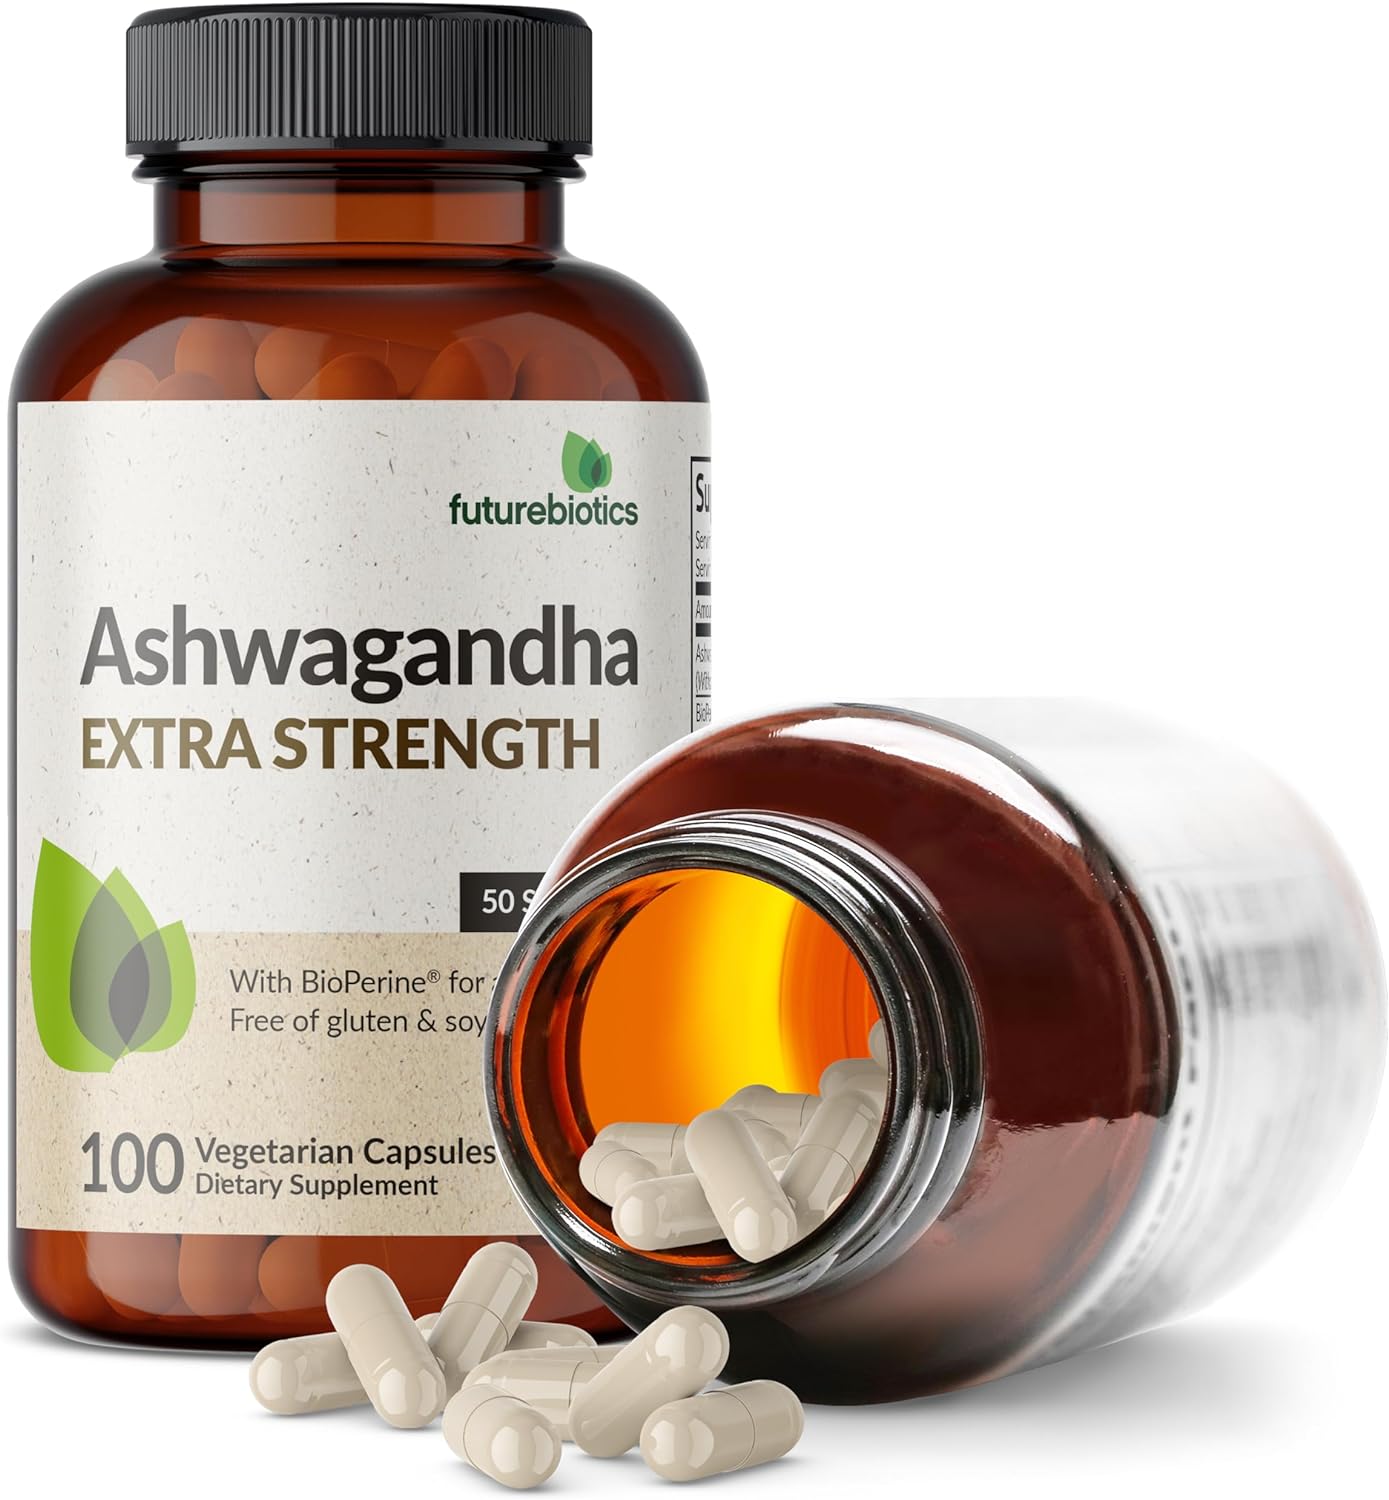 Ashwagandha Extra Strength Stress & Mood Support with Bioperine - Non GMO Formula, 100 Vegetarian Capsules